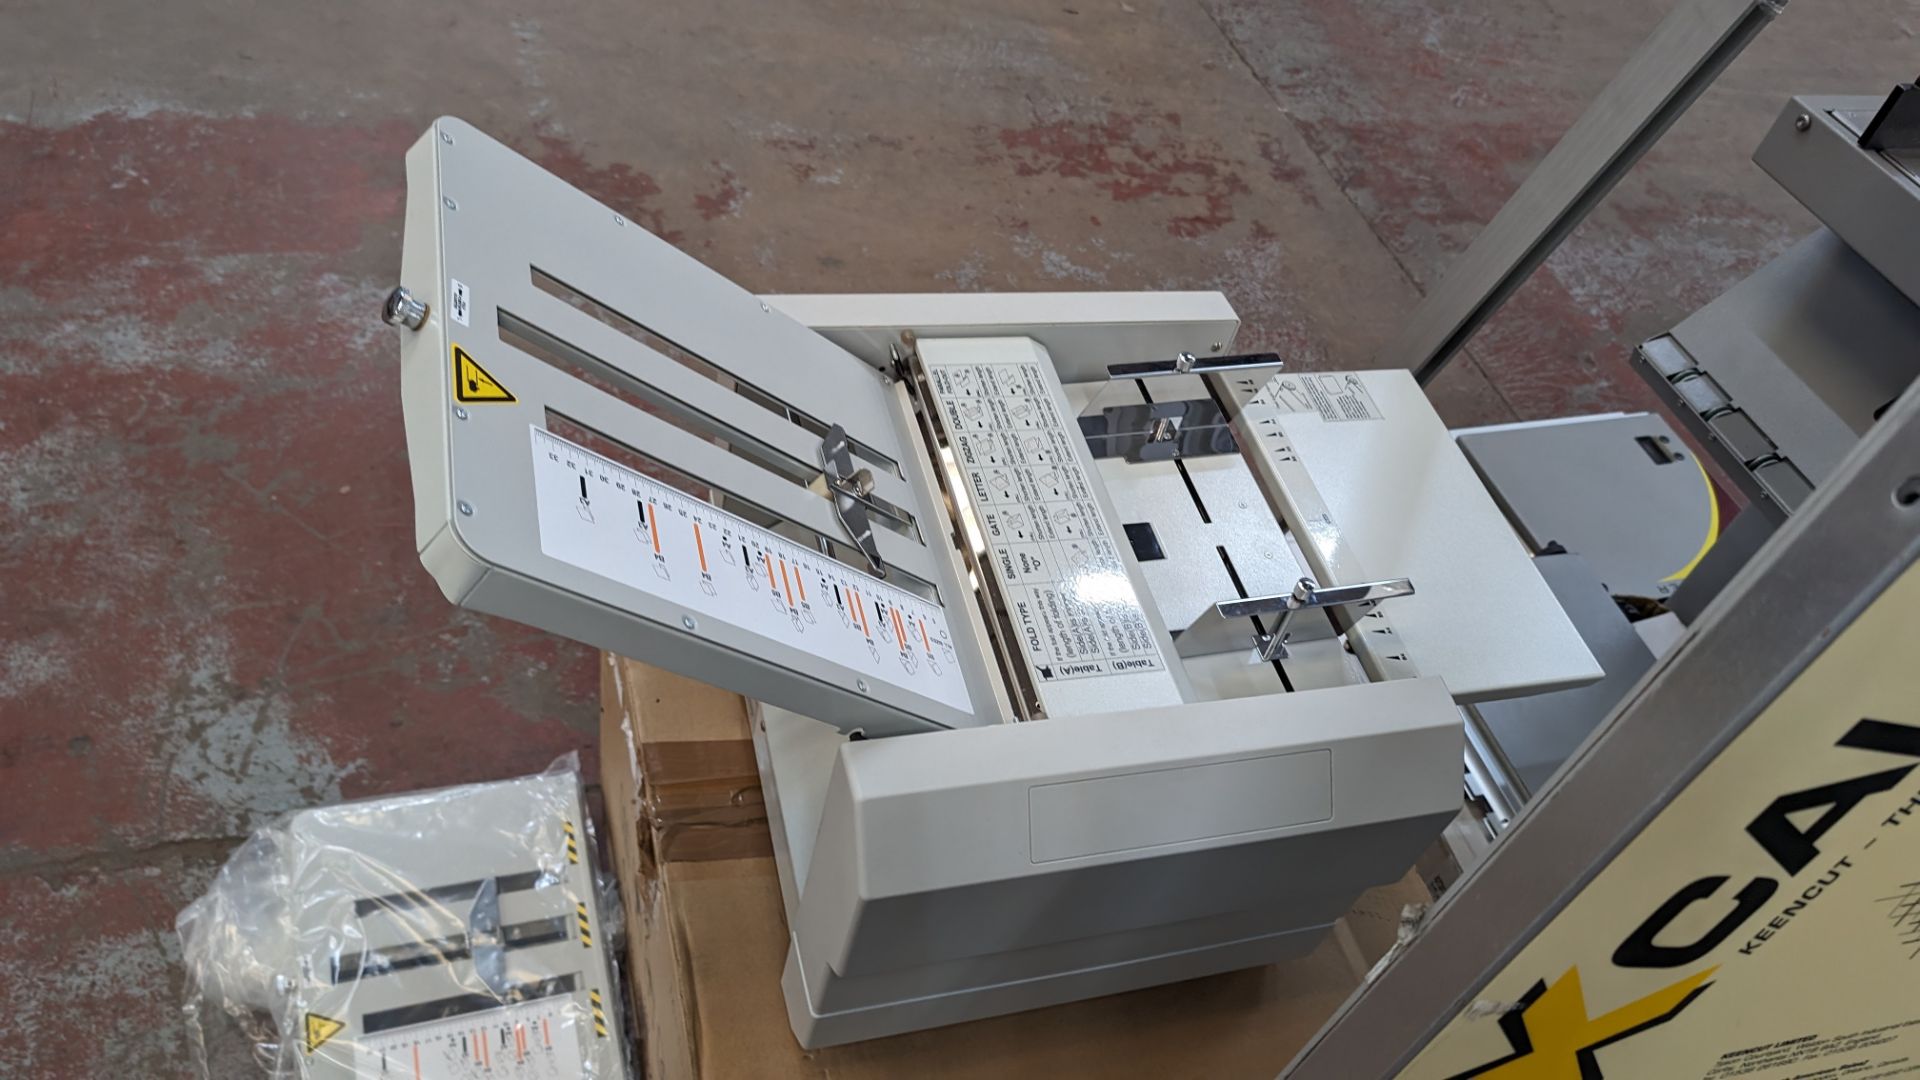 Galaxy FM600 paper folding machine including box & manual - Image 11 of 12